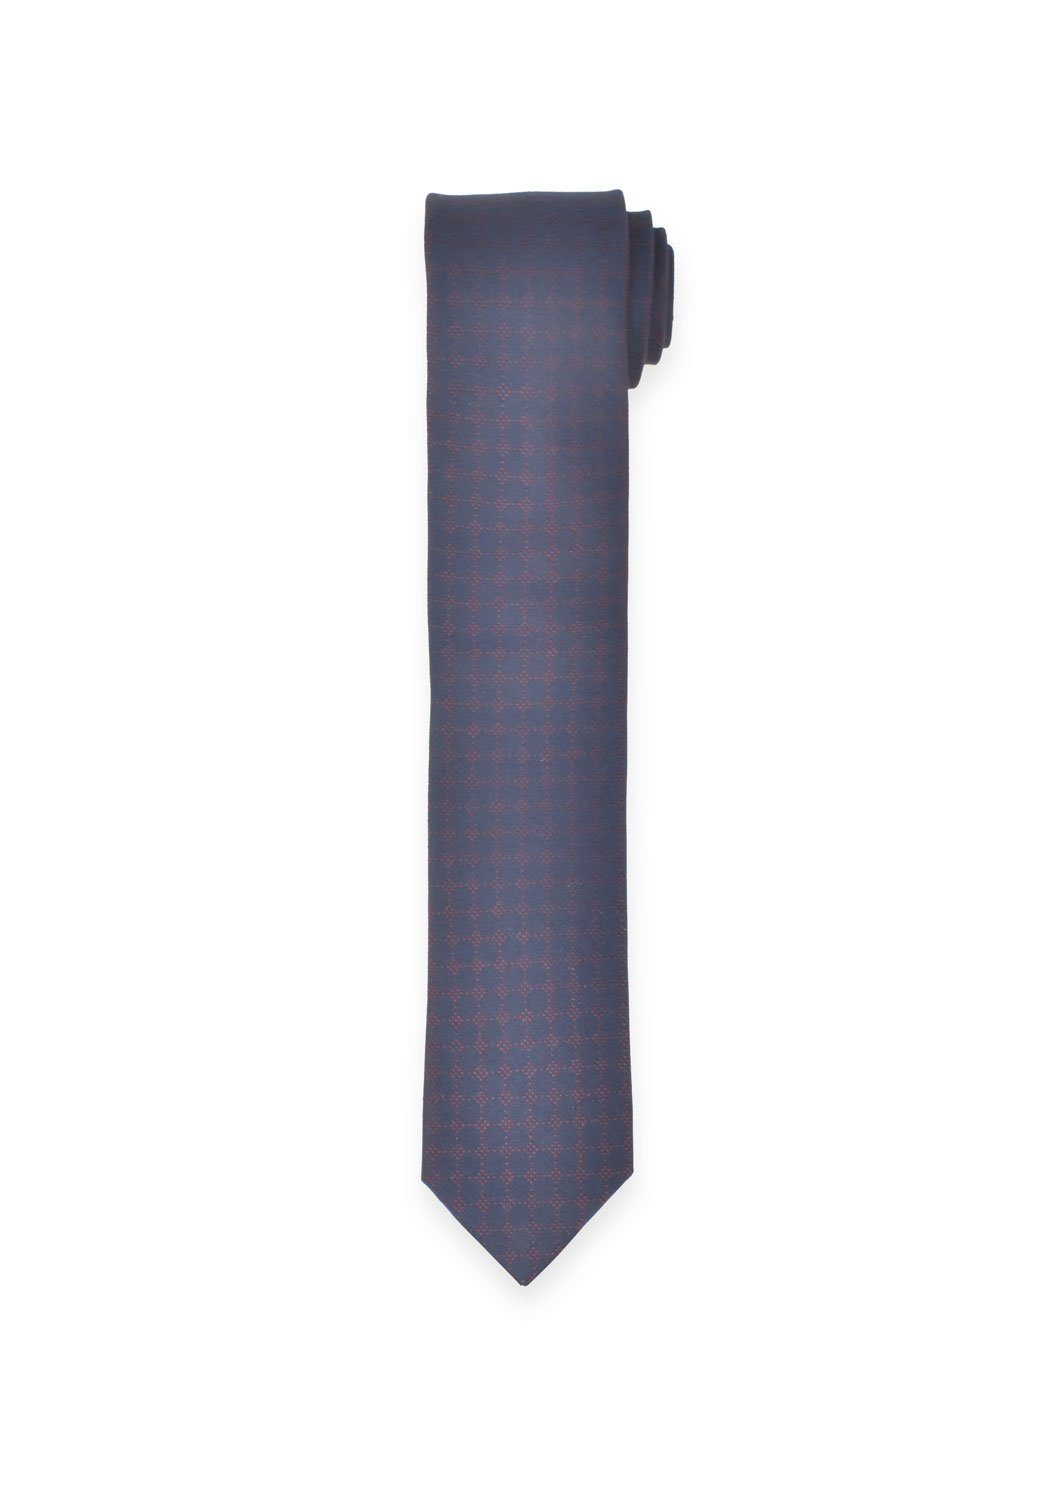 - - 6,5 Krawatte MARVELIS Dunkelblau/Cognac cm - Krawatte Punkte